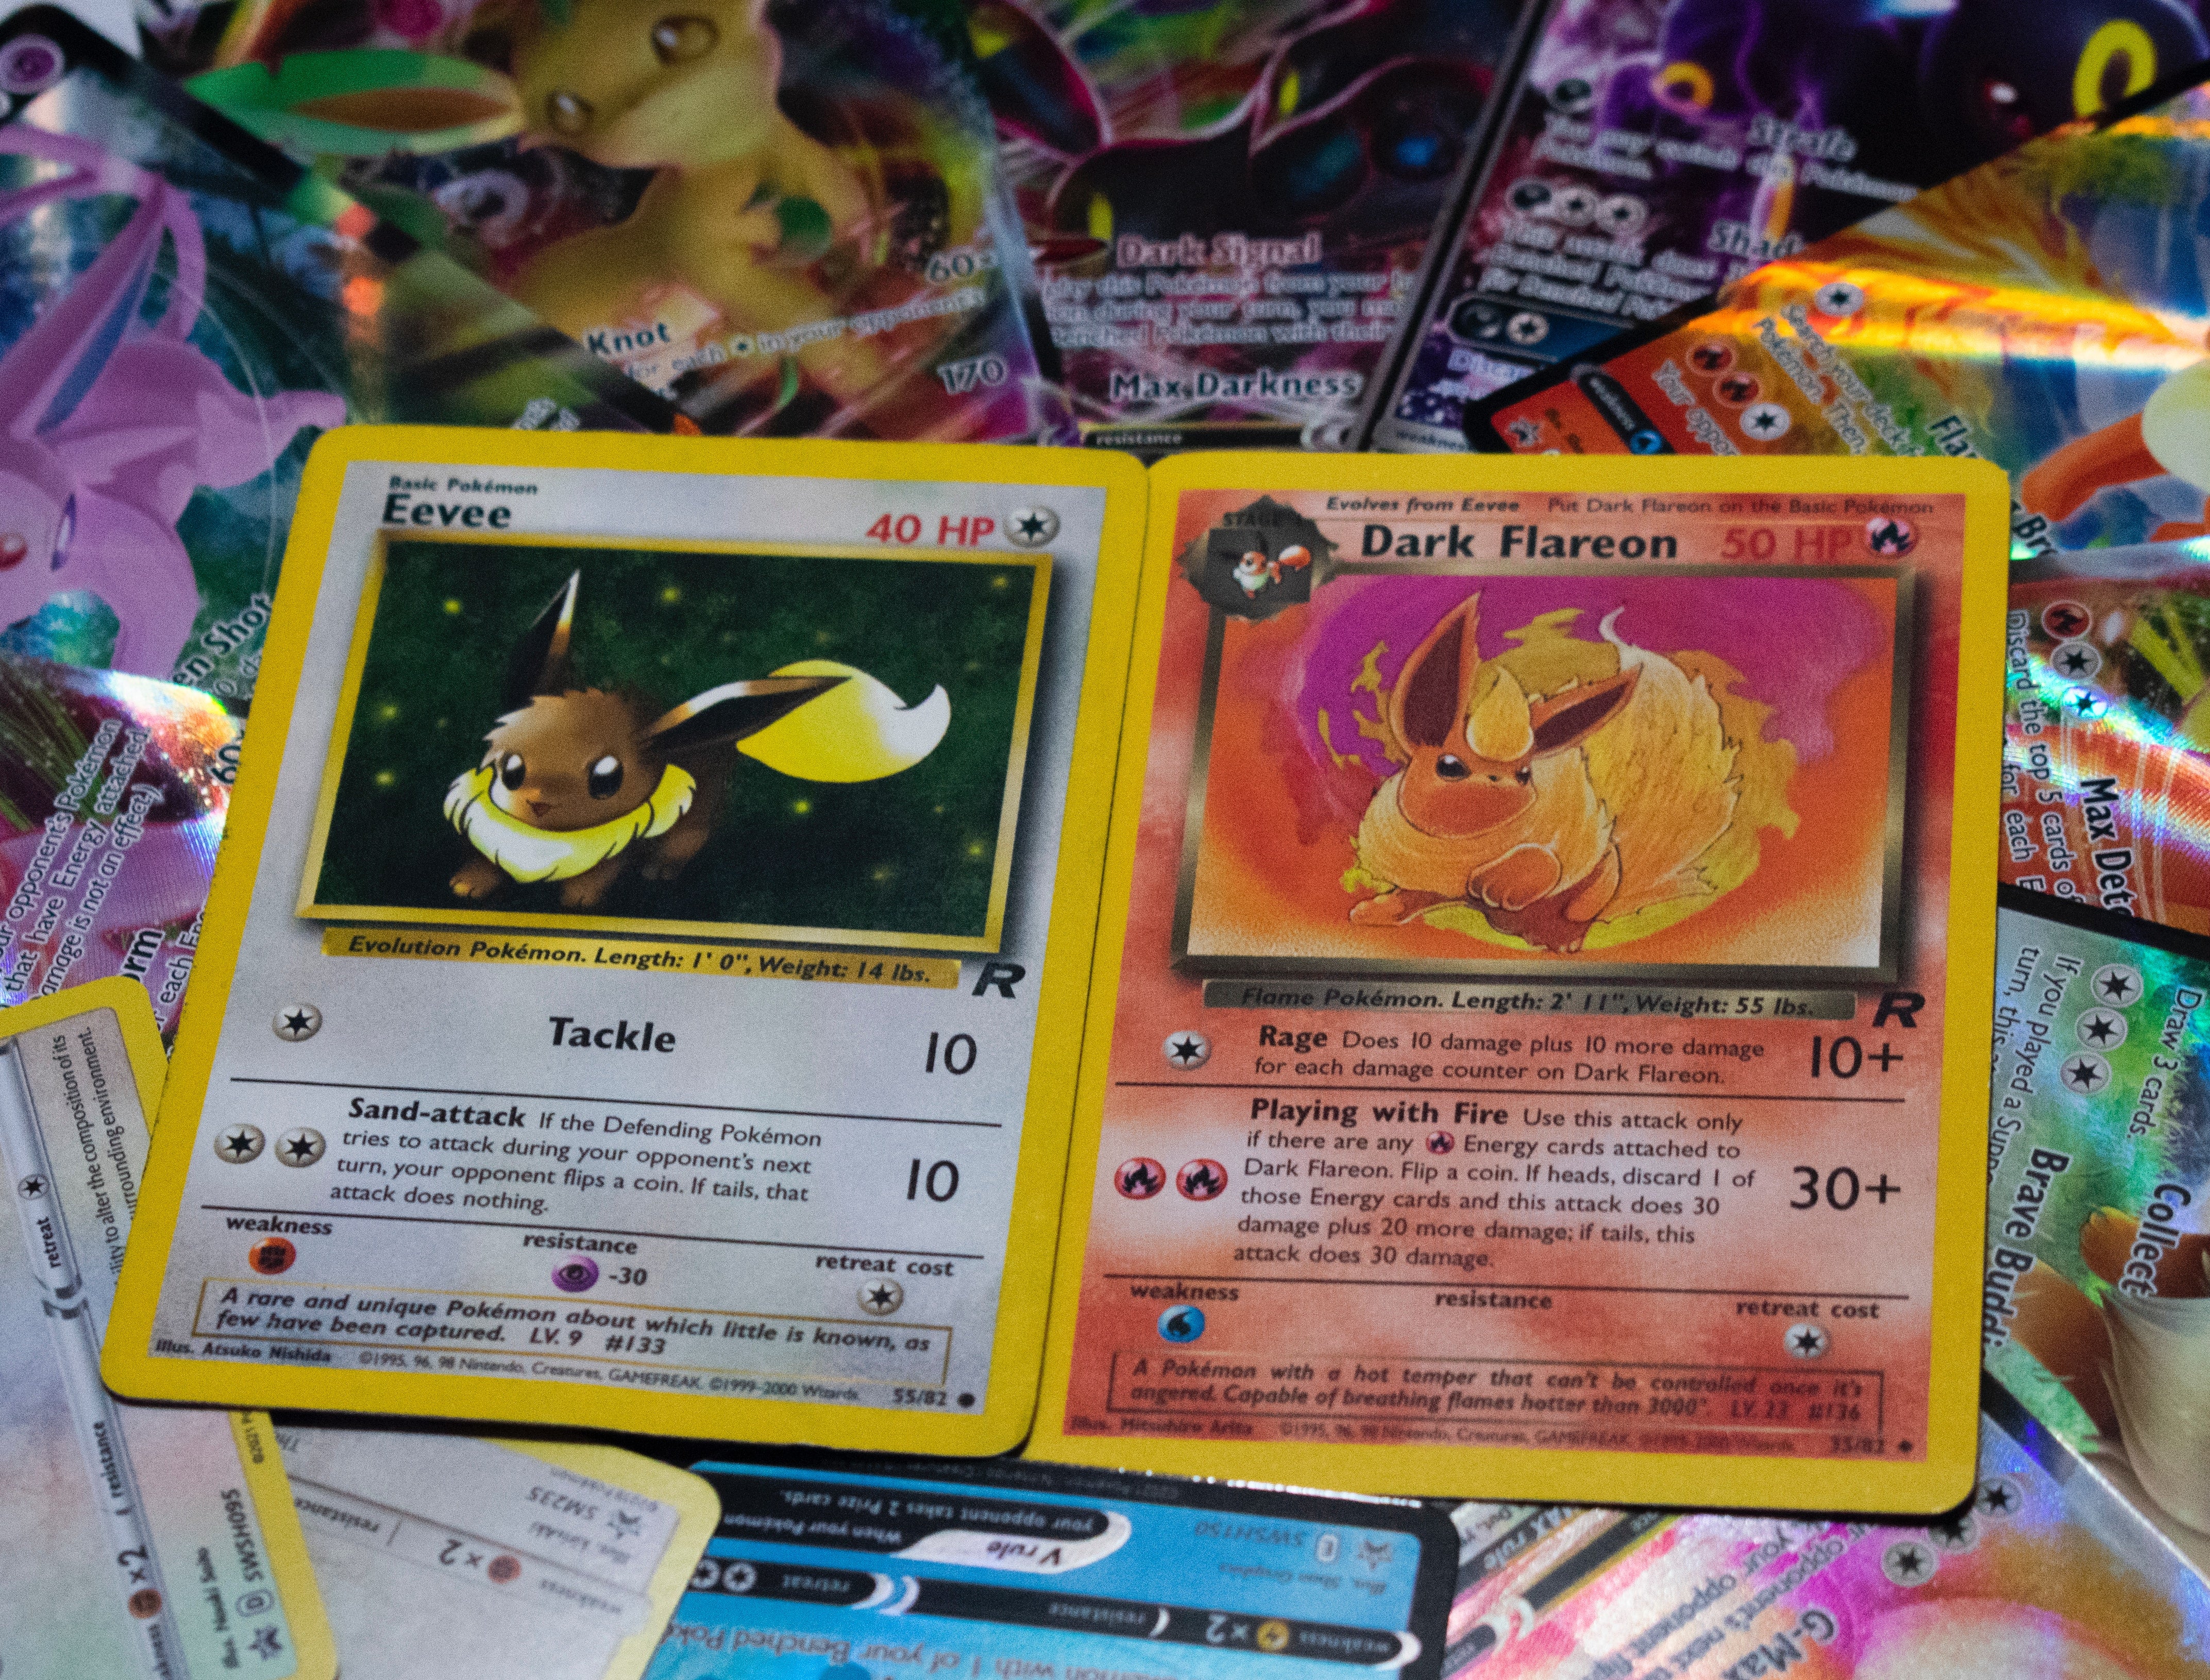 How to Make a Pokémon Binder: DIY Pokémon Card Binder Step-by-Step